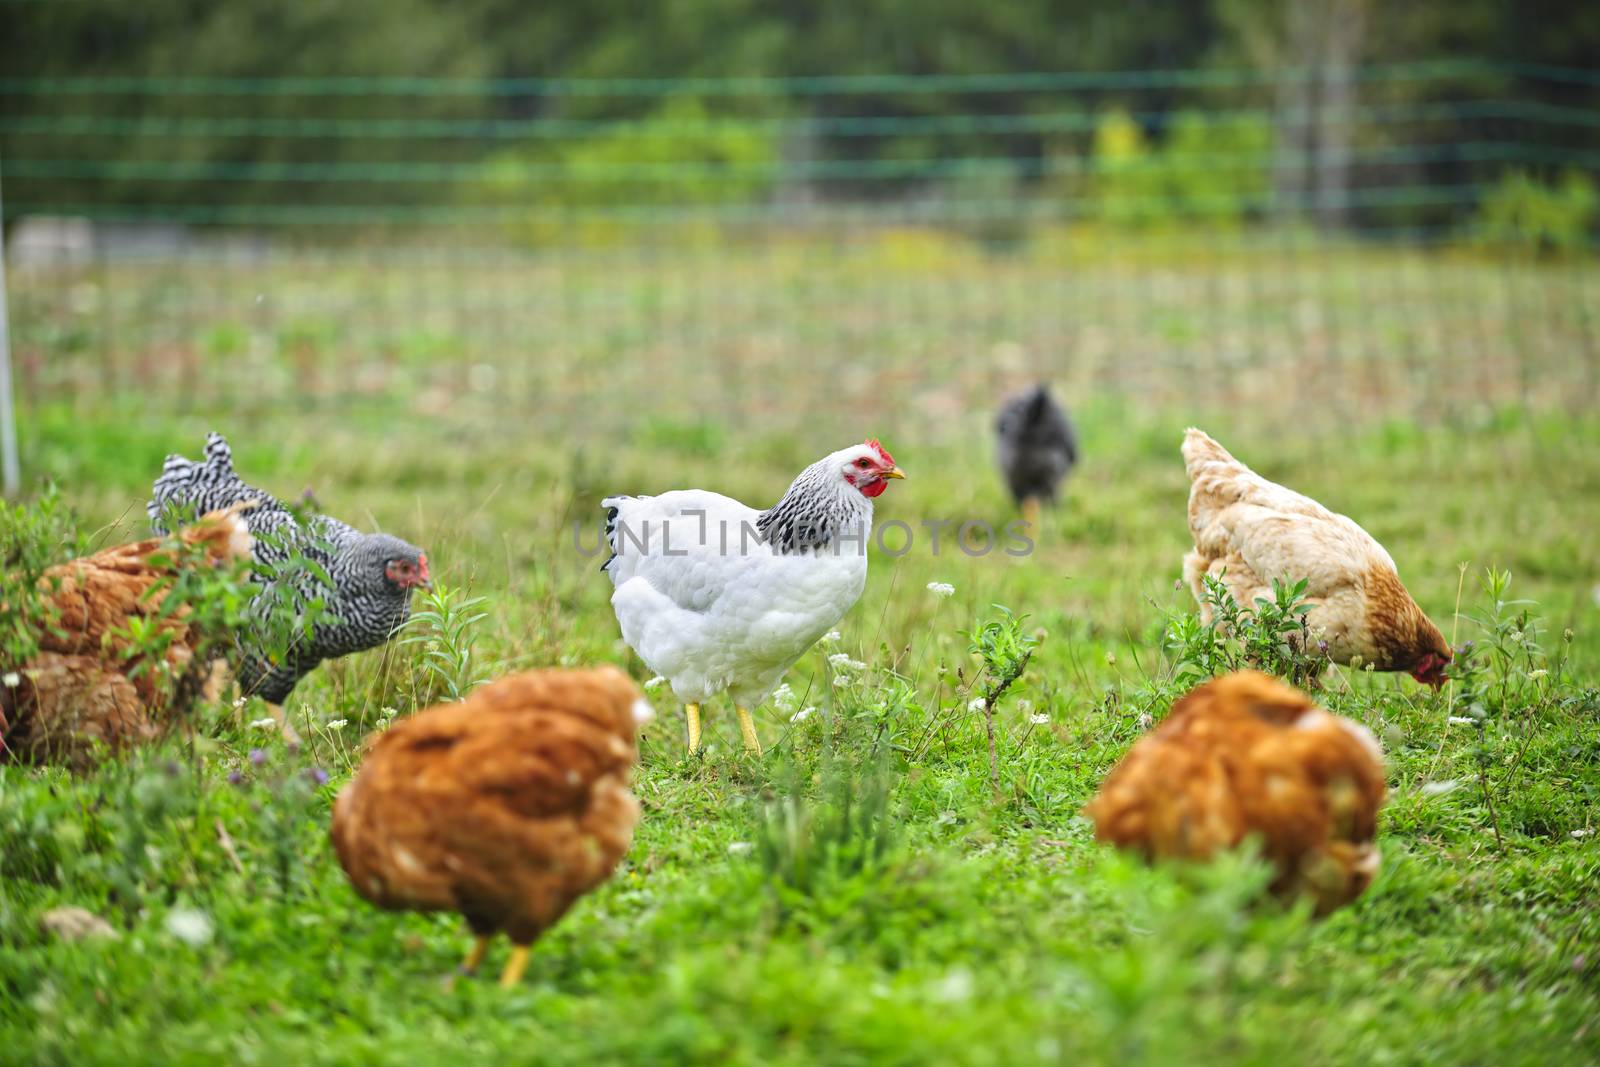 Free range chickens on farm by elenathewise